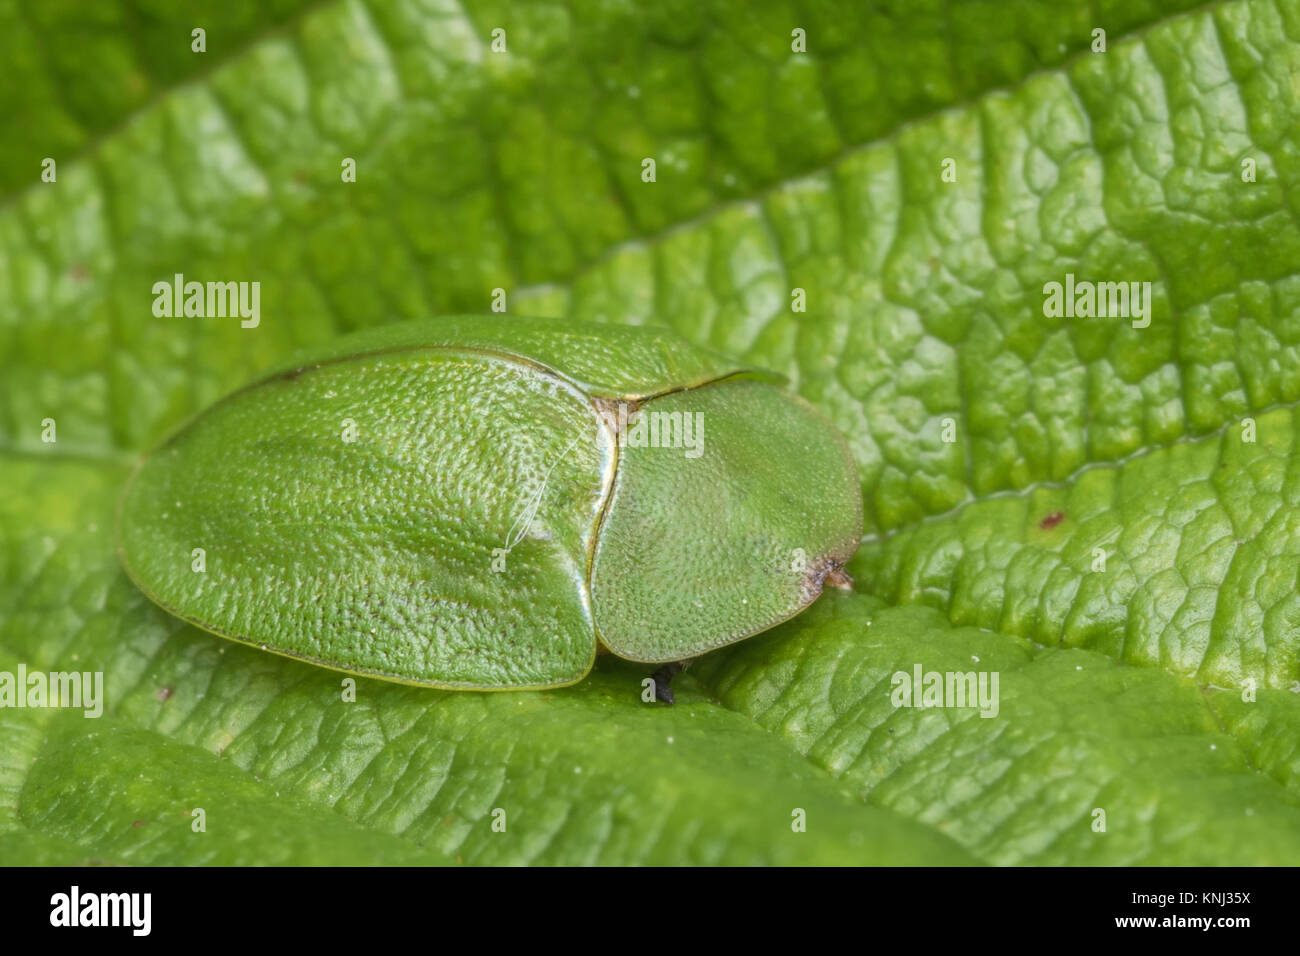 Tartaruga Verde Scarabeo (Cassida viridis) ben mimetizzata sulla foglia. Cabragh zone umide, Thurles, Tipperary, Irlanda. Foto Stock